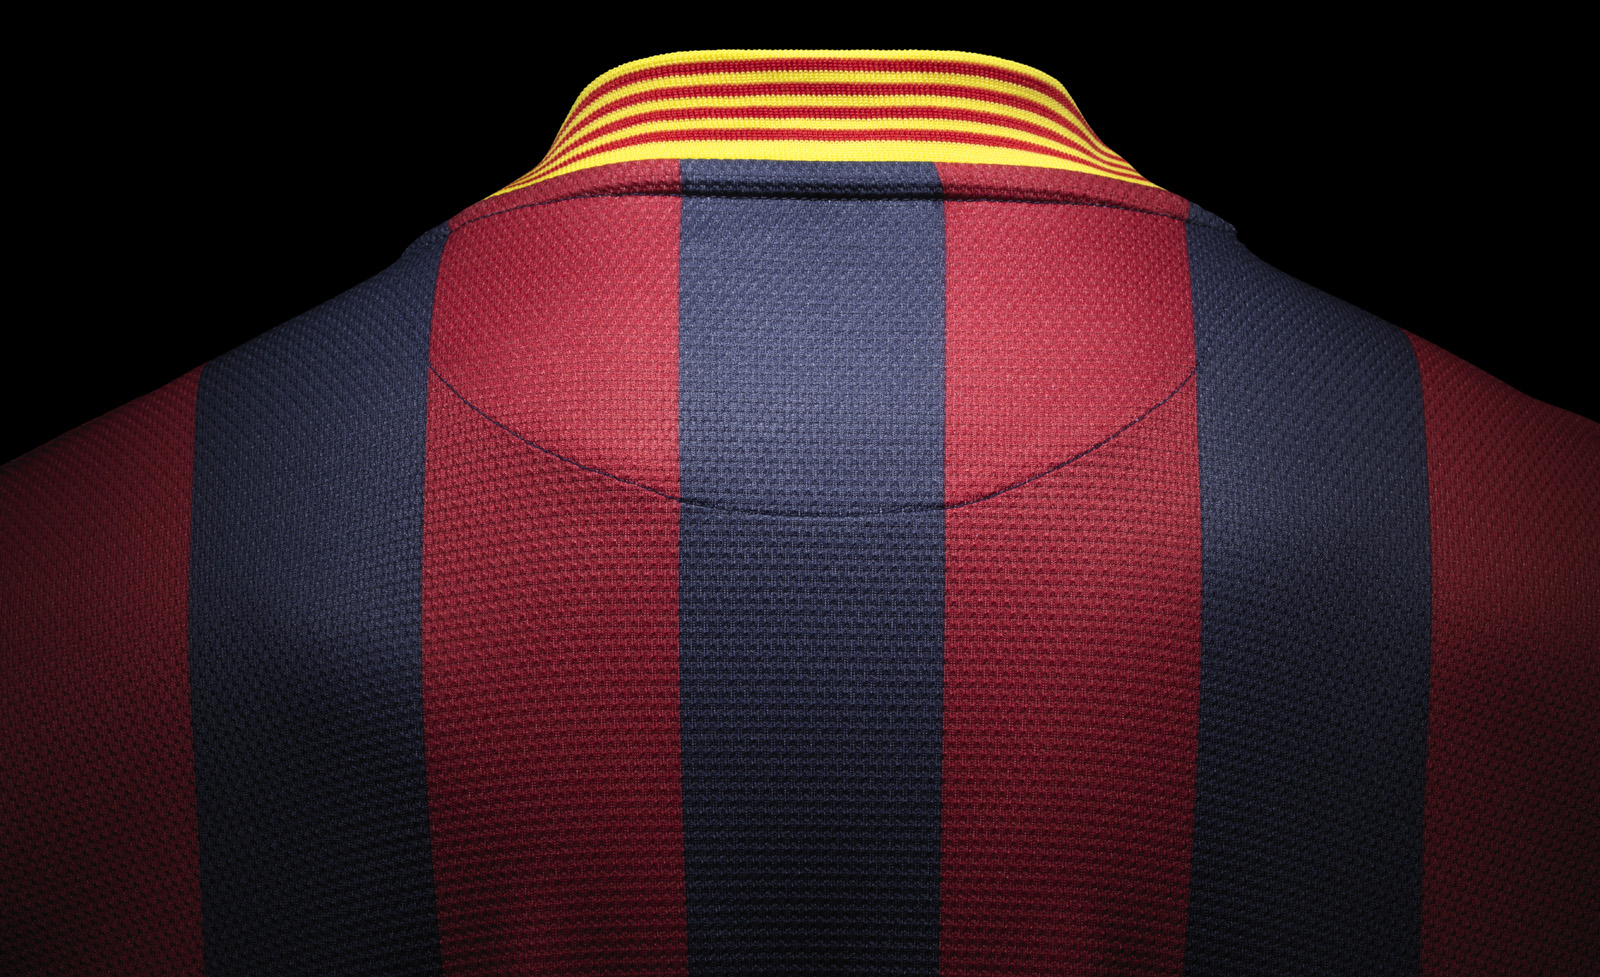 FC Barcelona 13 14 Home Away Kits Released Third Kit Info